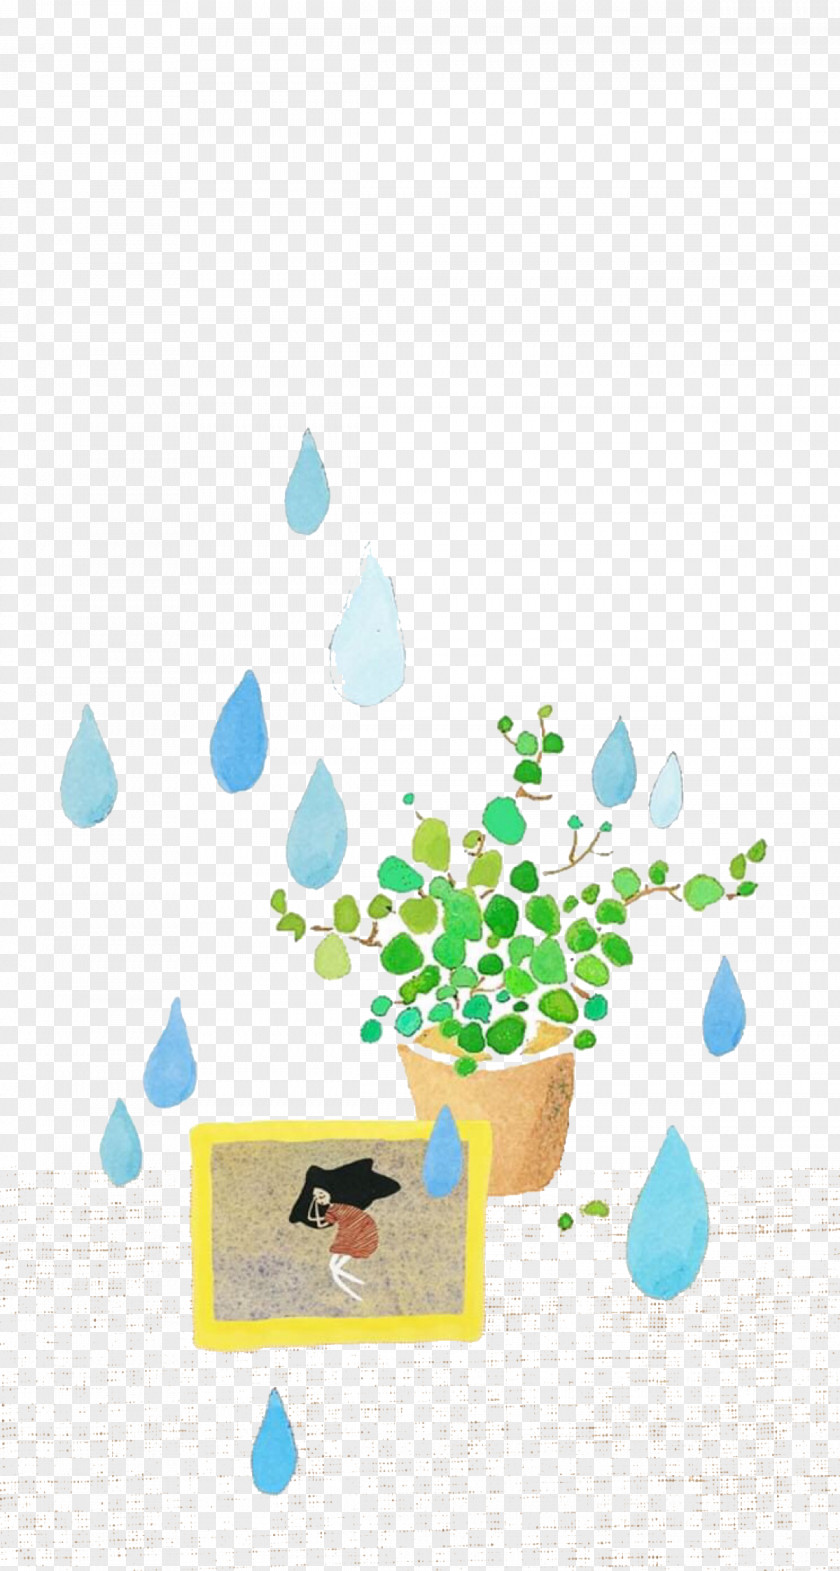 Floating Water Droplets Drop Illustration PNG